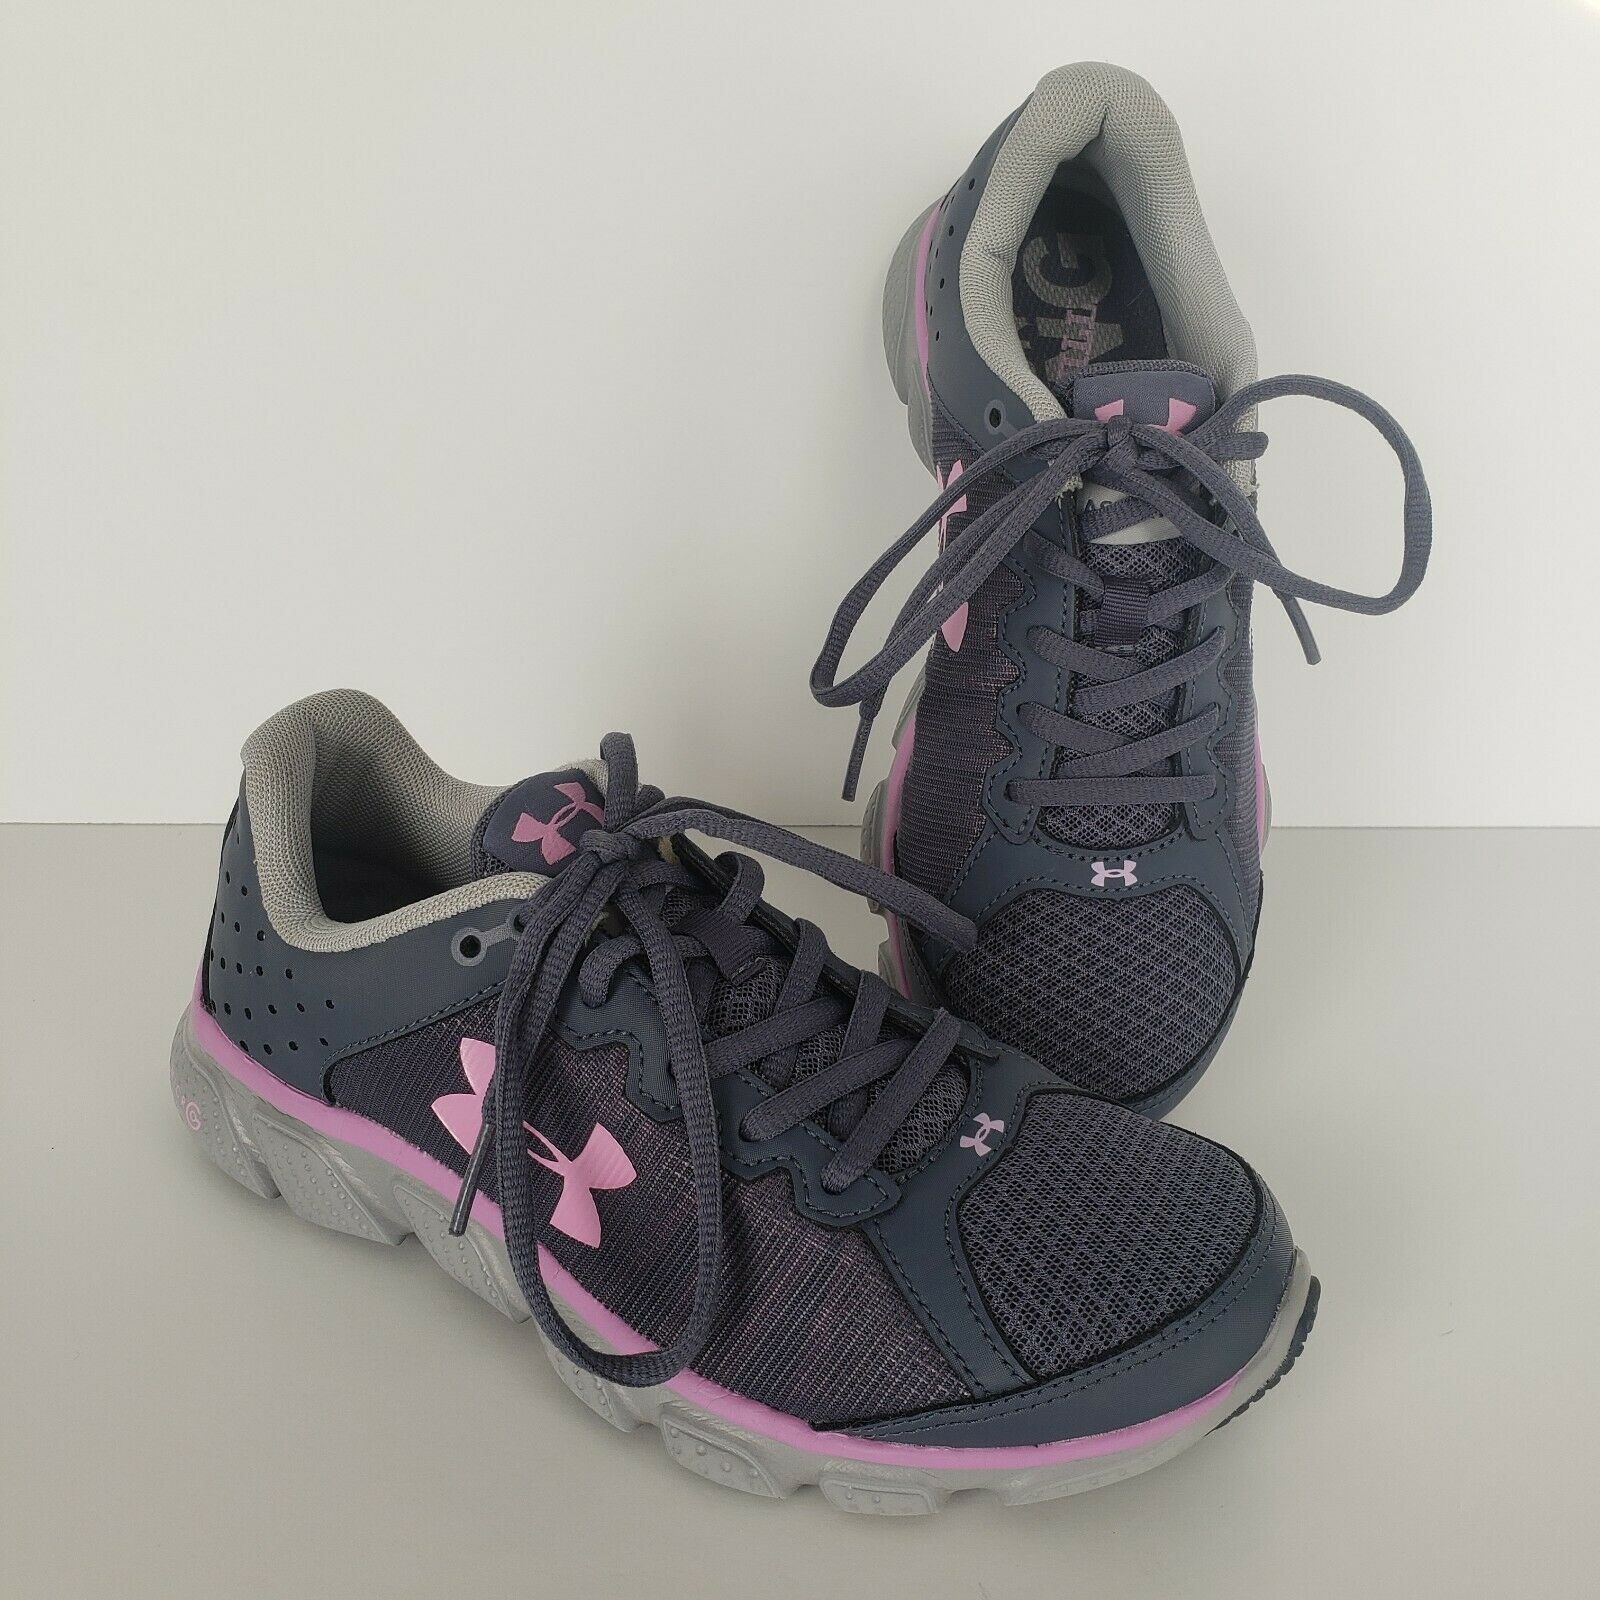 Under Armour Assert 6 Running Shoes Size 7 Grey/Pink Micro Walking Women’s